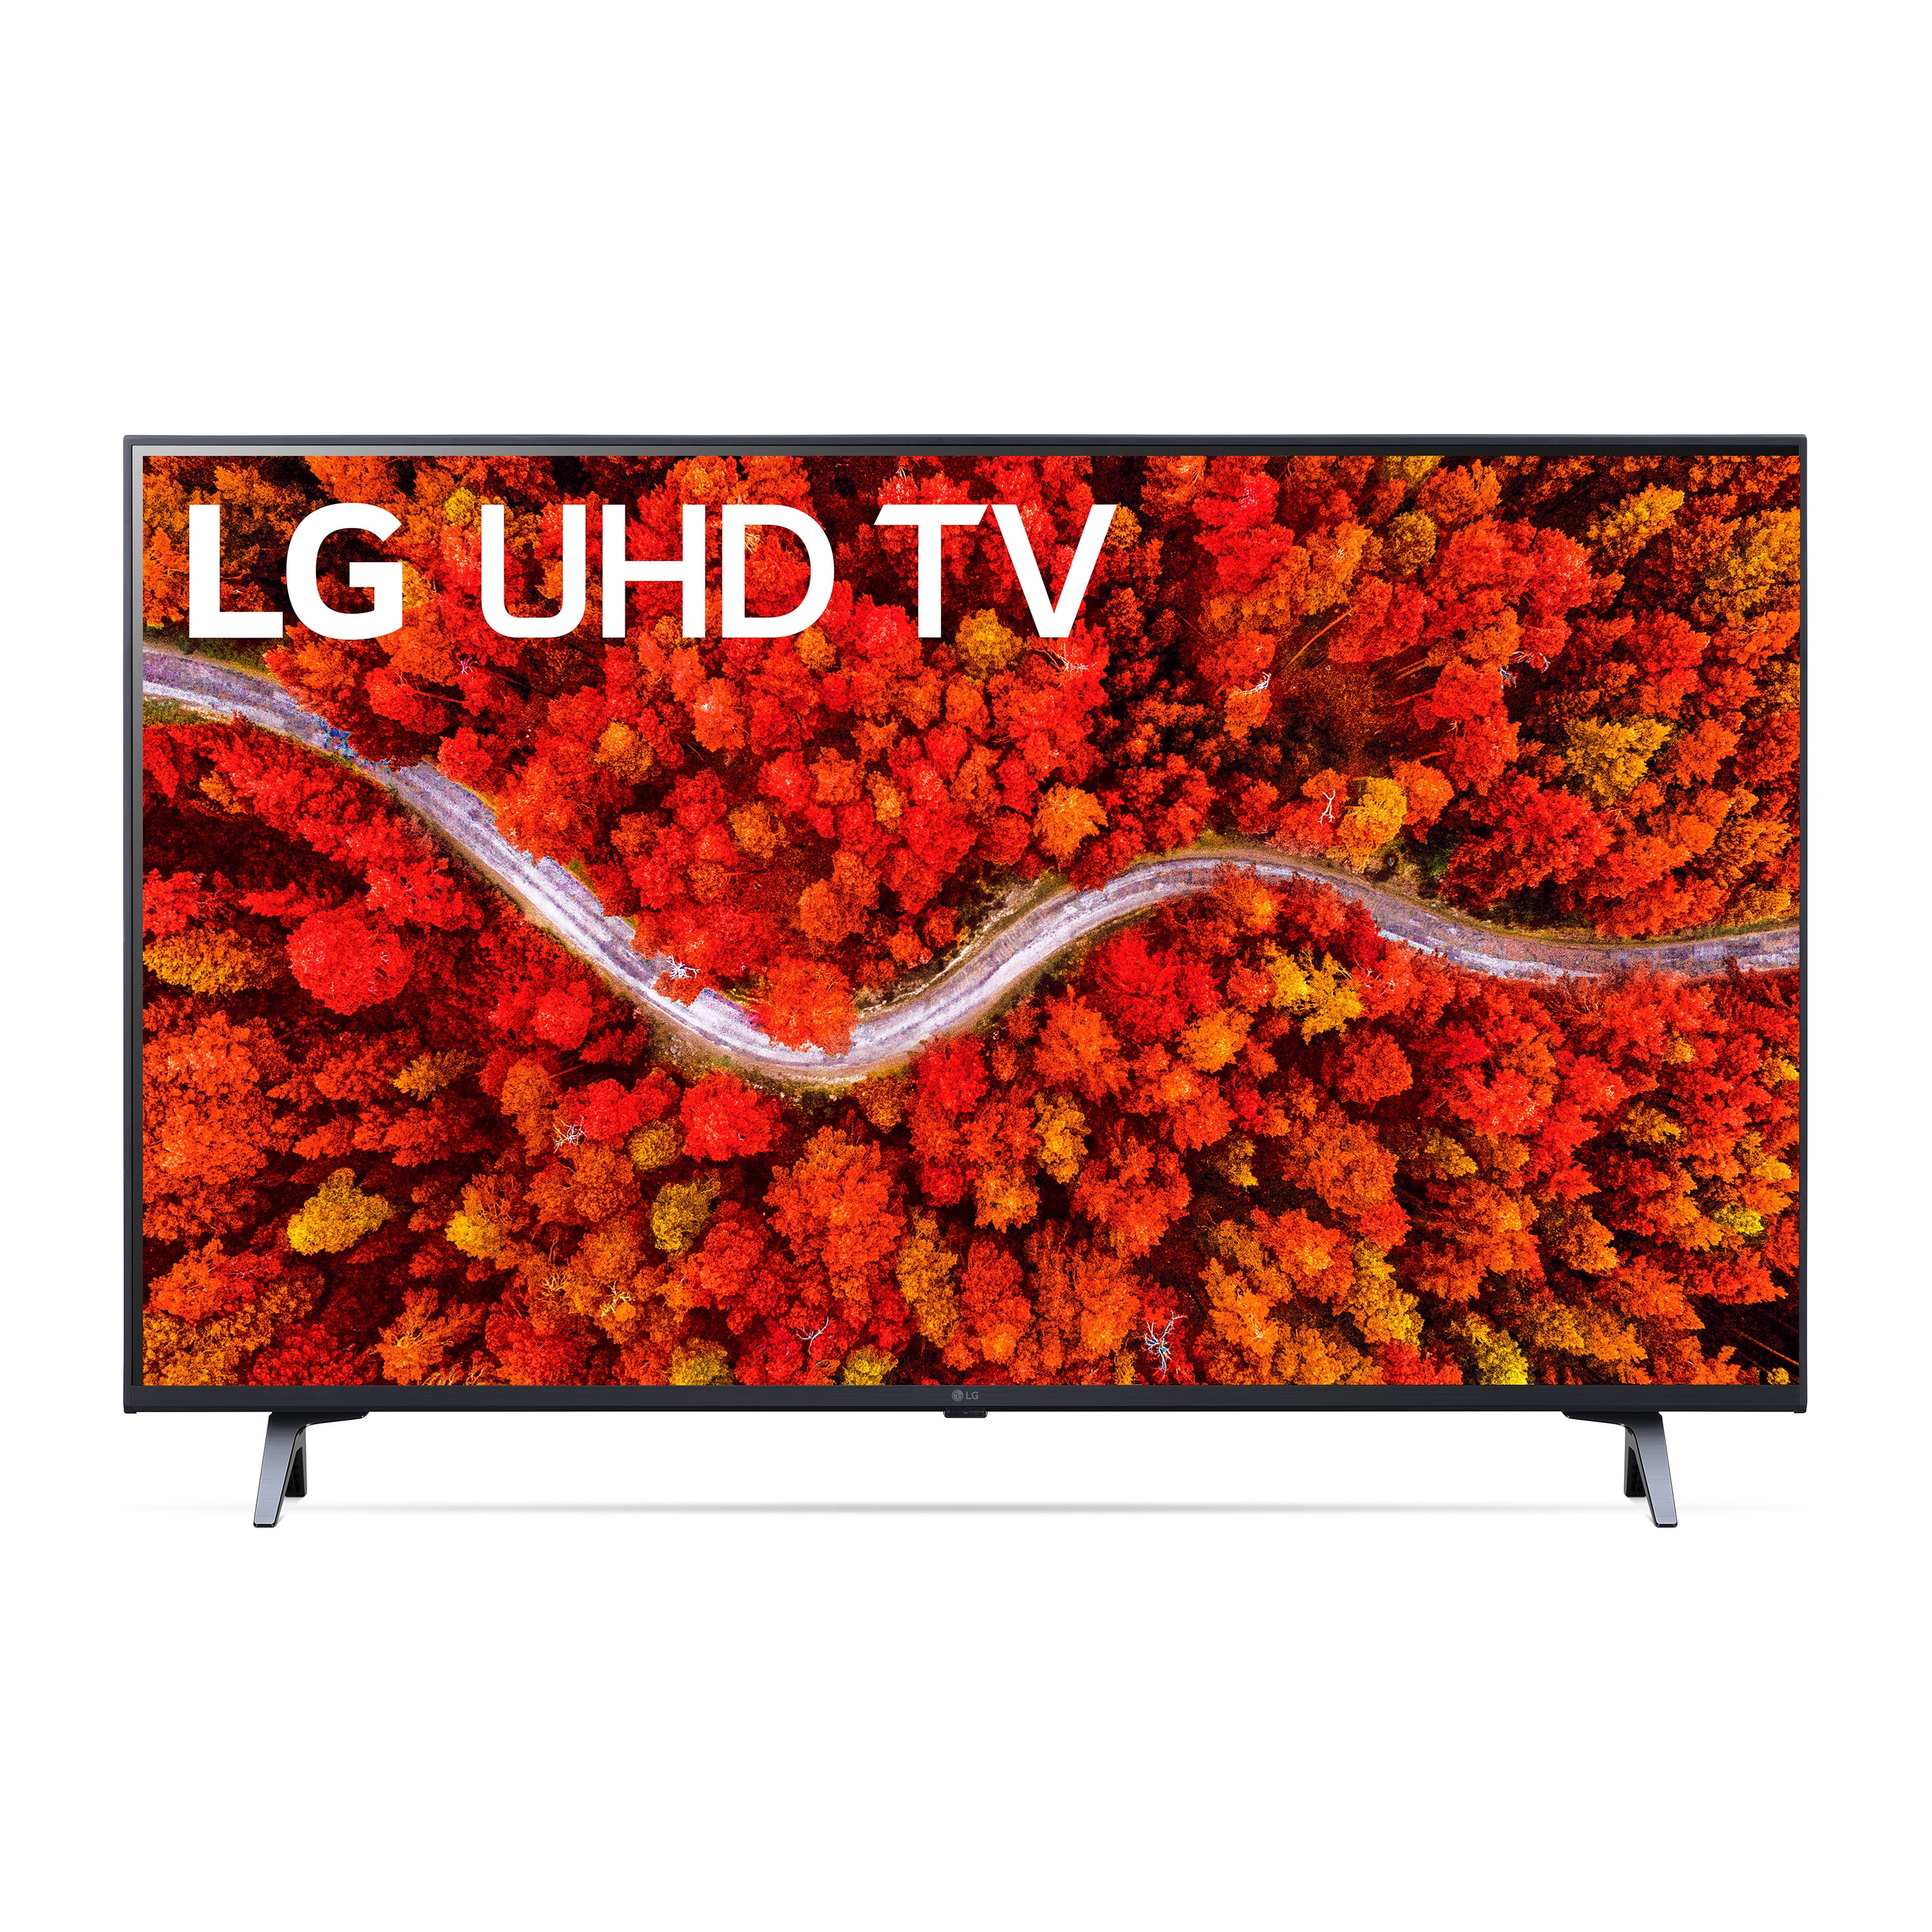 LG UHD 80 Series 43 inch Class 4K Smart UHD TV with AI ThinQ 